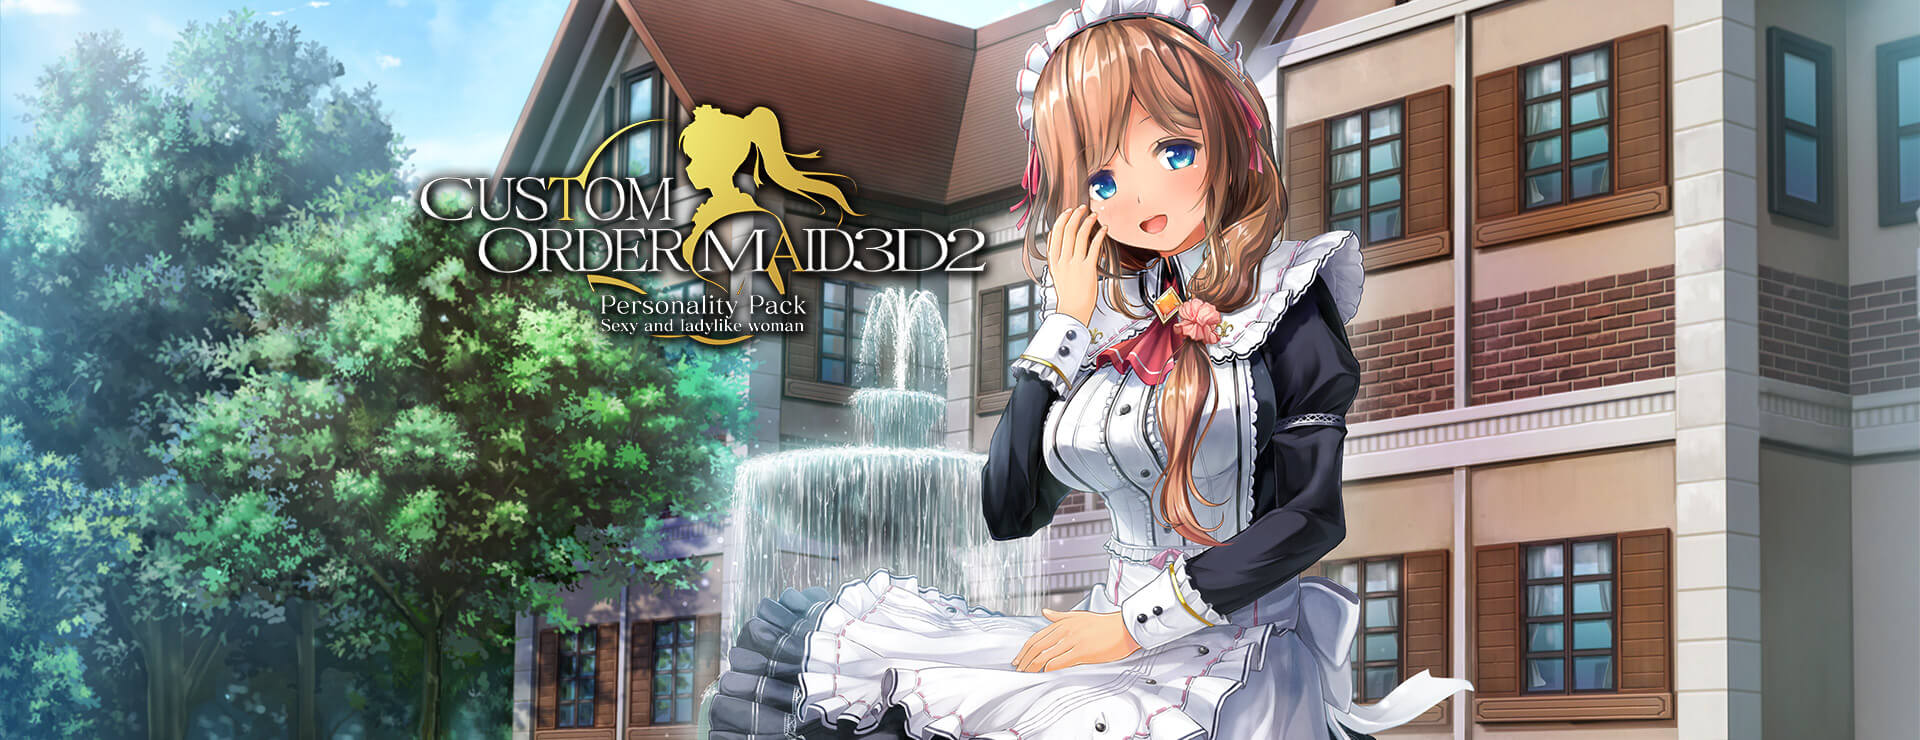 Custom Order Maid 3D2 Sexy and Ladylike Woman DLC - シミュレーション ゲーム